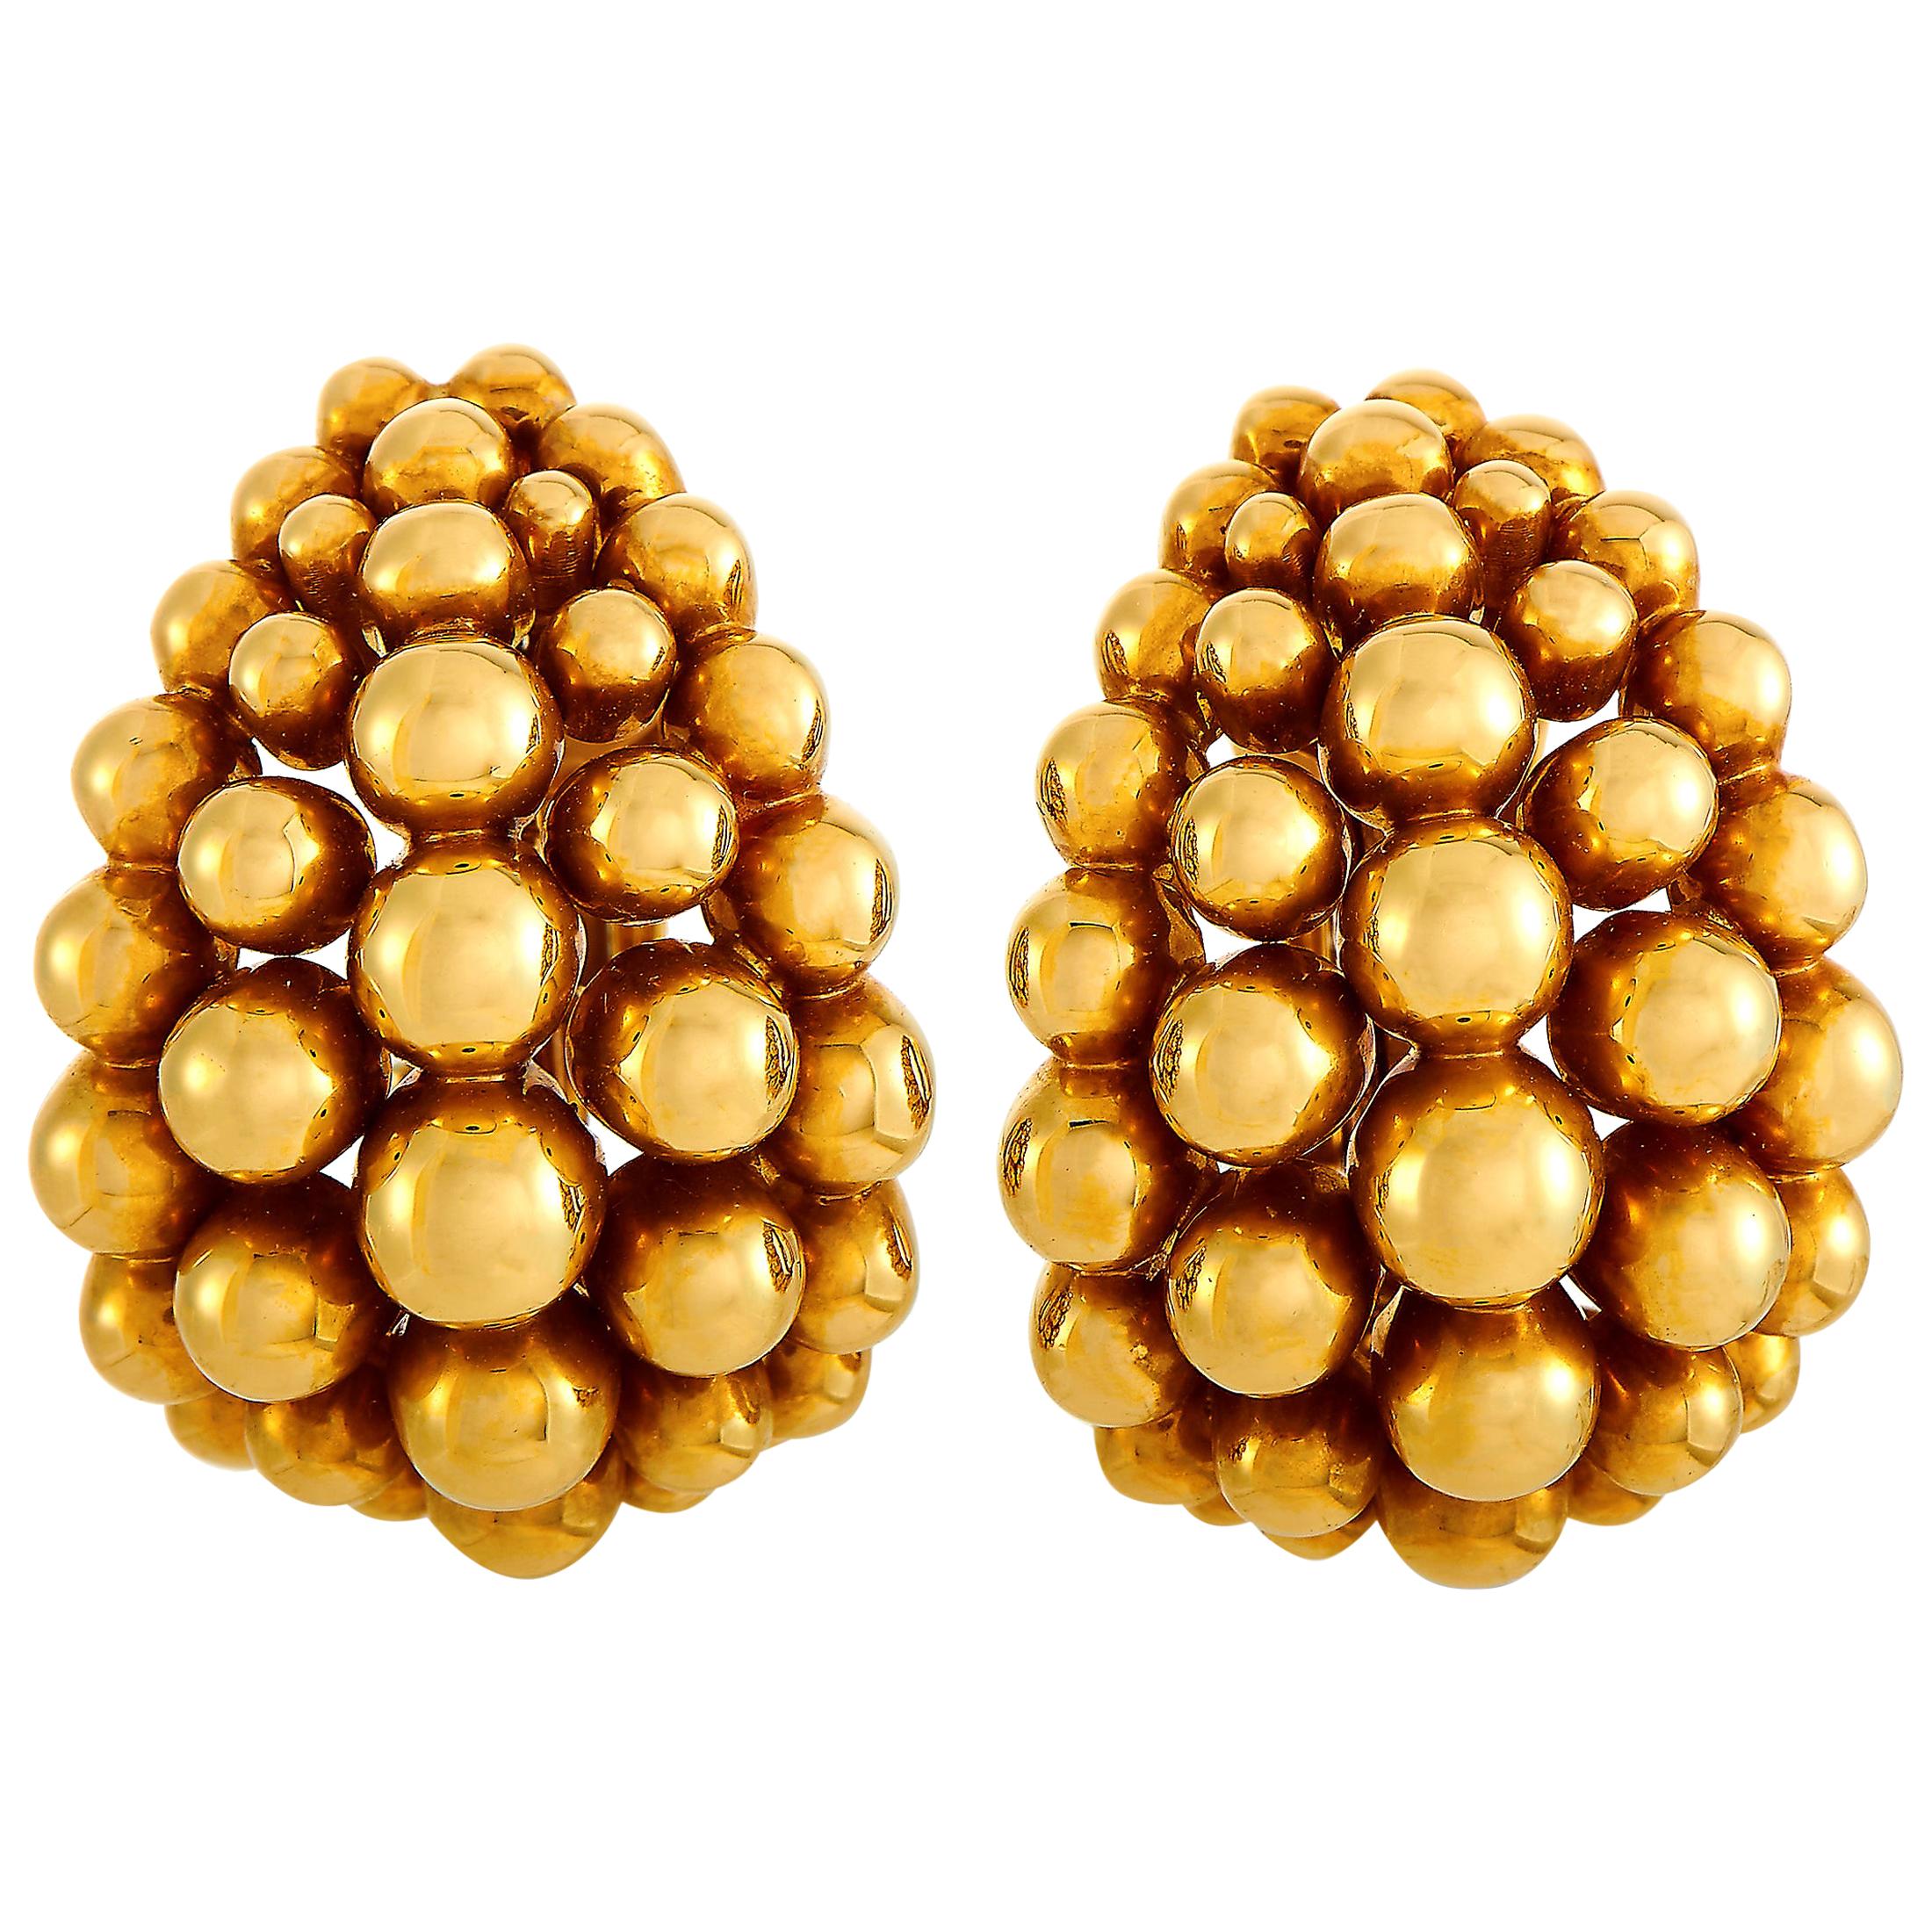 Boucheron Grains de Raisin 18 Karat Yellow Gold Earrings